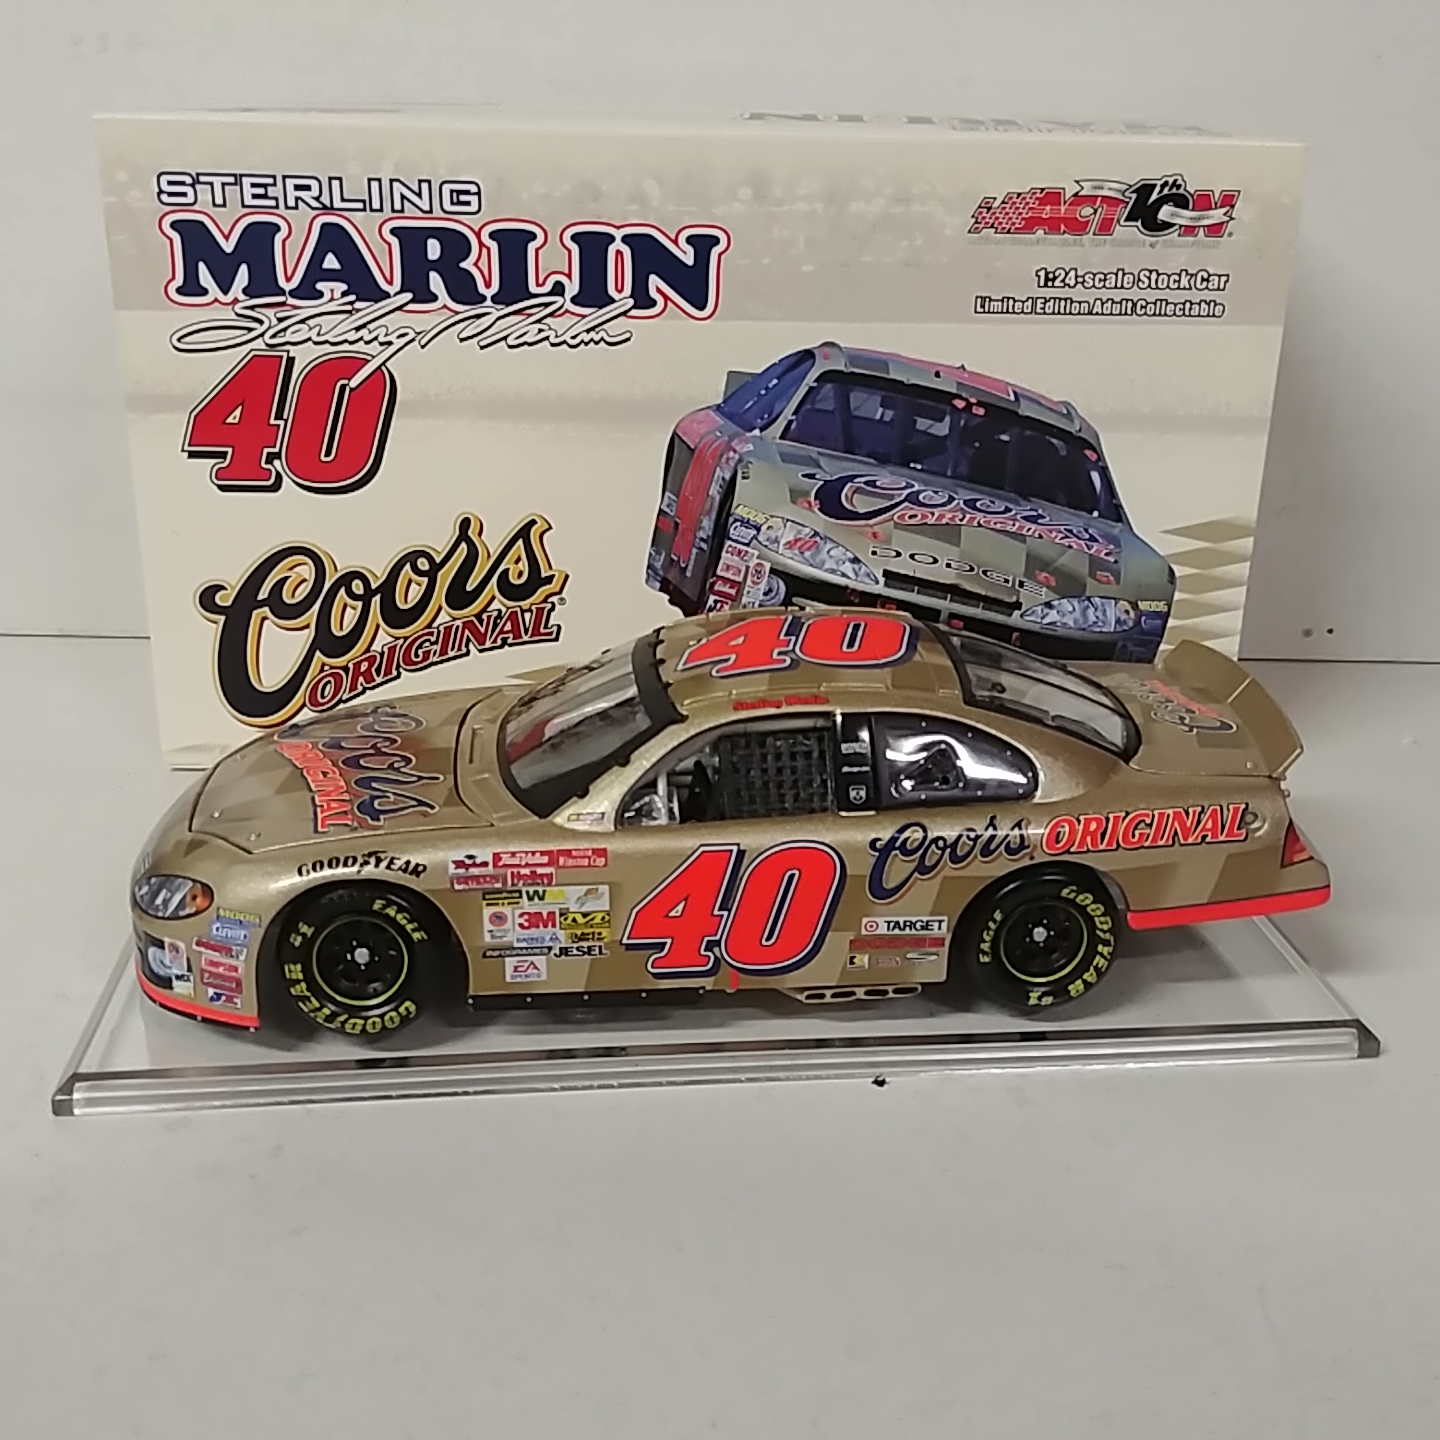 2002 Sterling Marlin 1/24th Coors Original c/w car